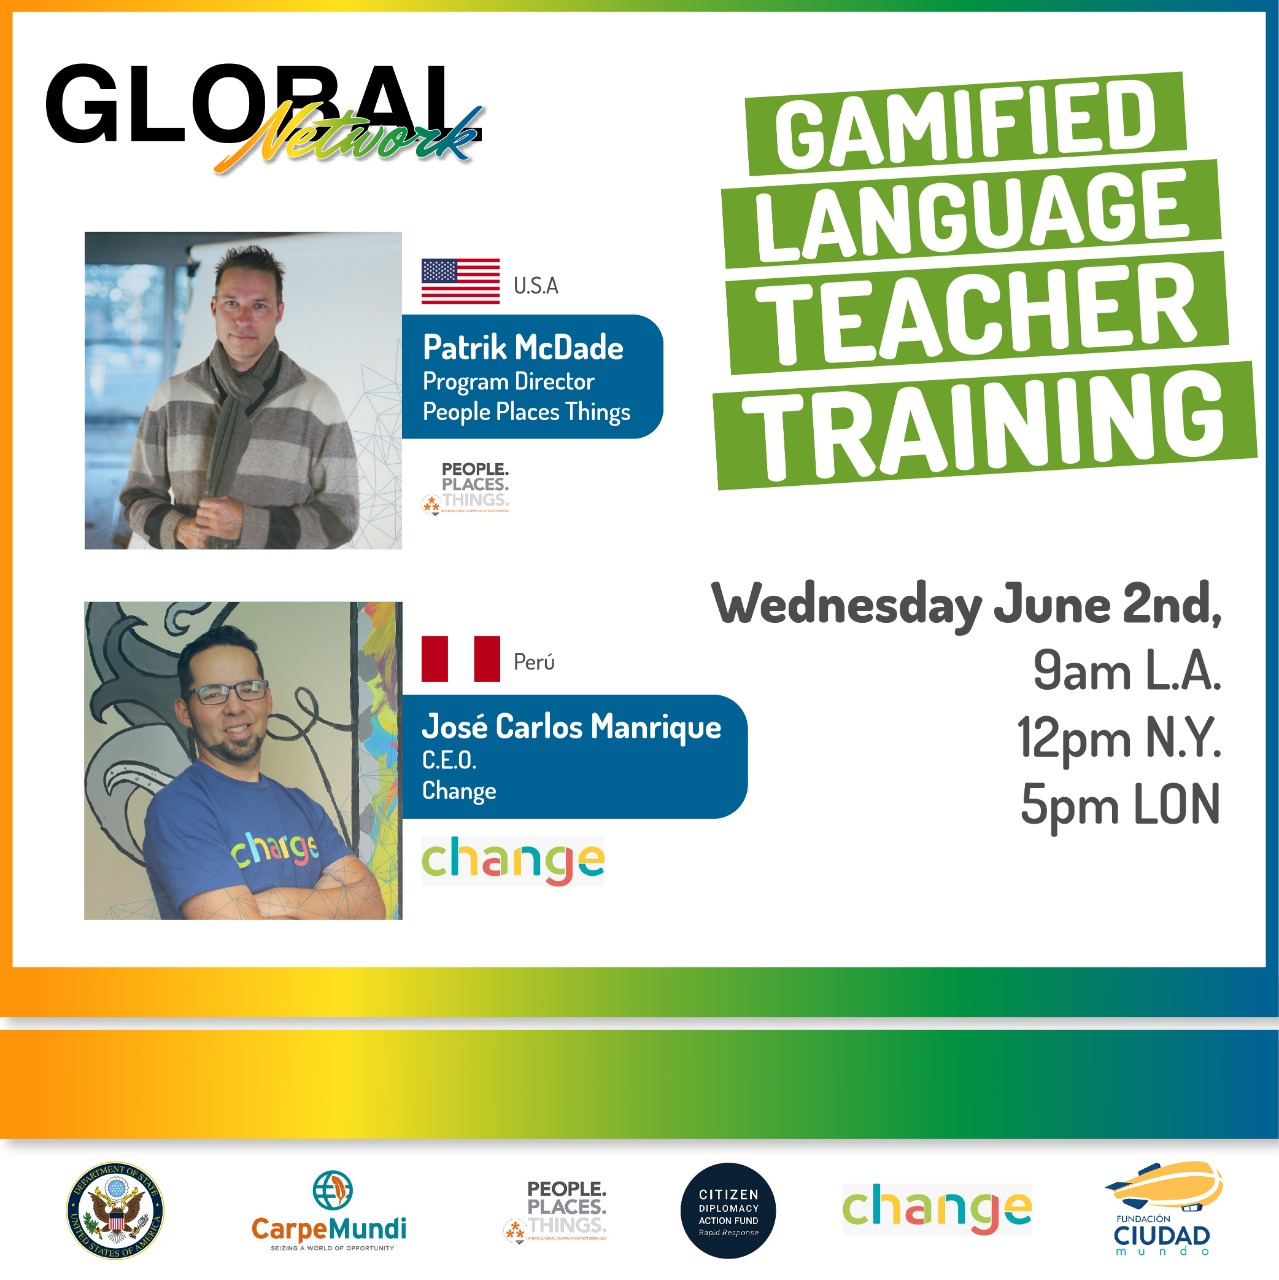 Global Network organiza el taller “Gamified Language Teacher Training”